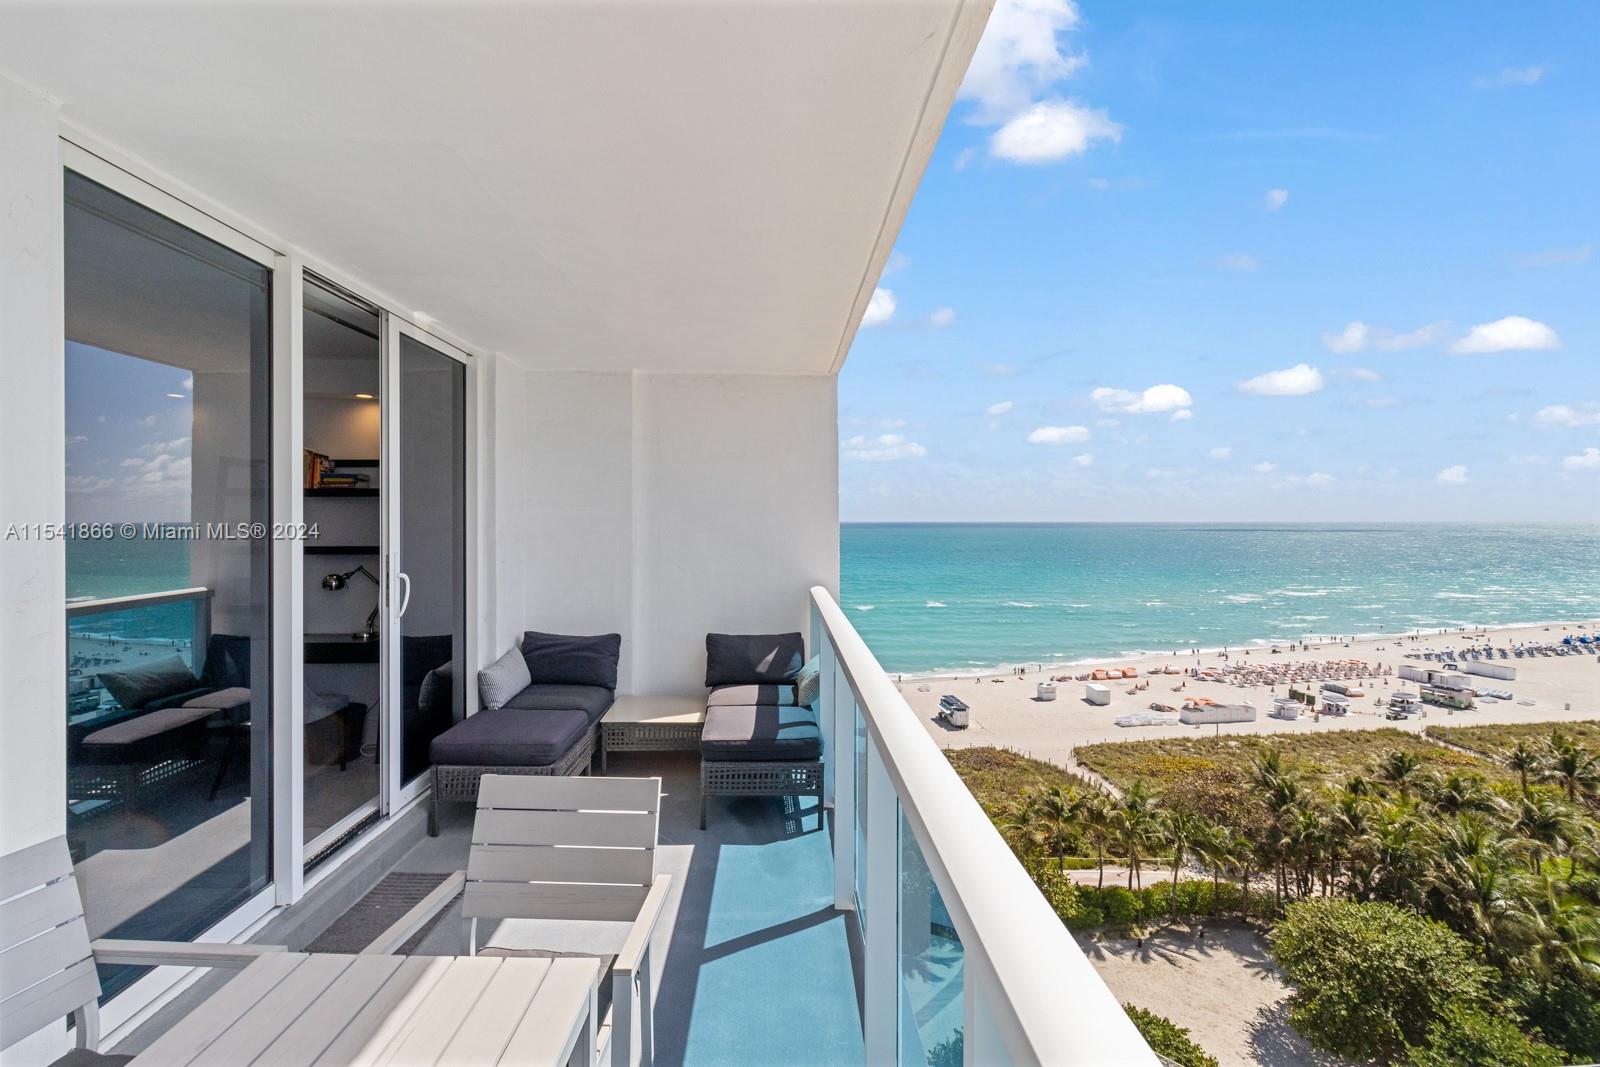 Rental Property at 2301 Collins Ave 1108, Miami Beach, Miami-Dade County, Florida - Bedrooms: 2 
Bathrooms: 2  - $9,850 MO.